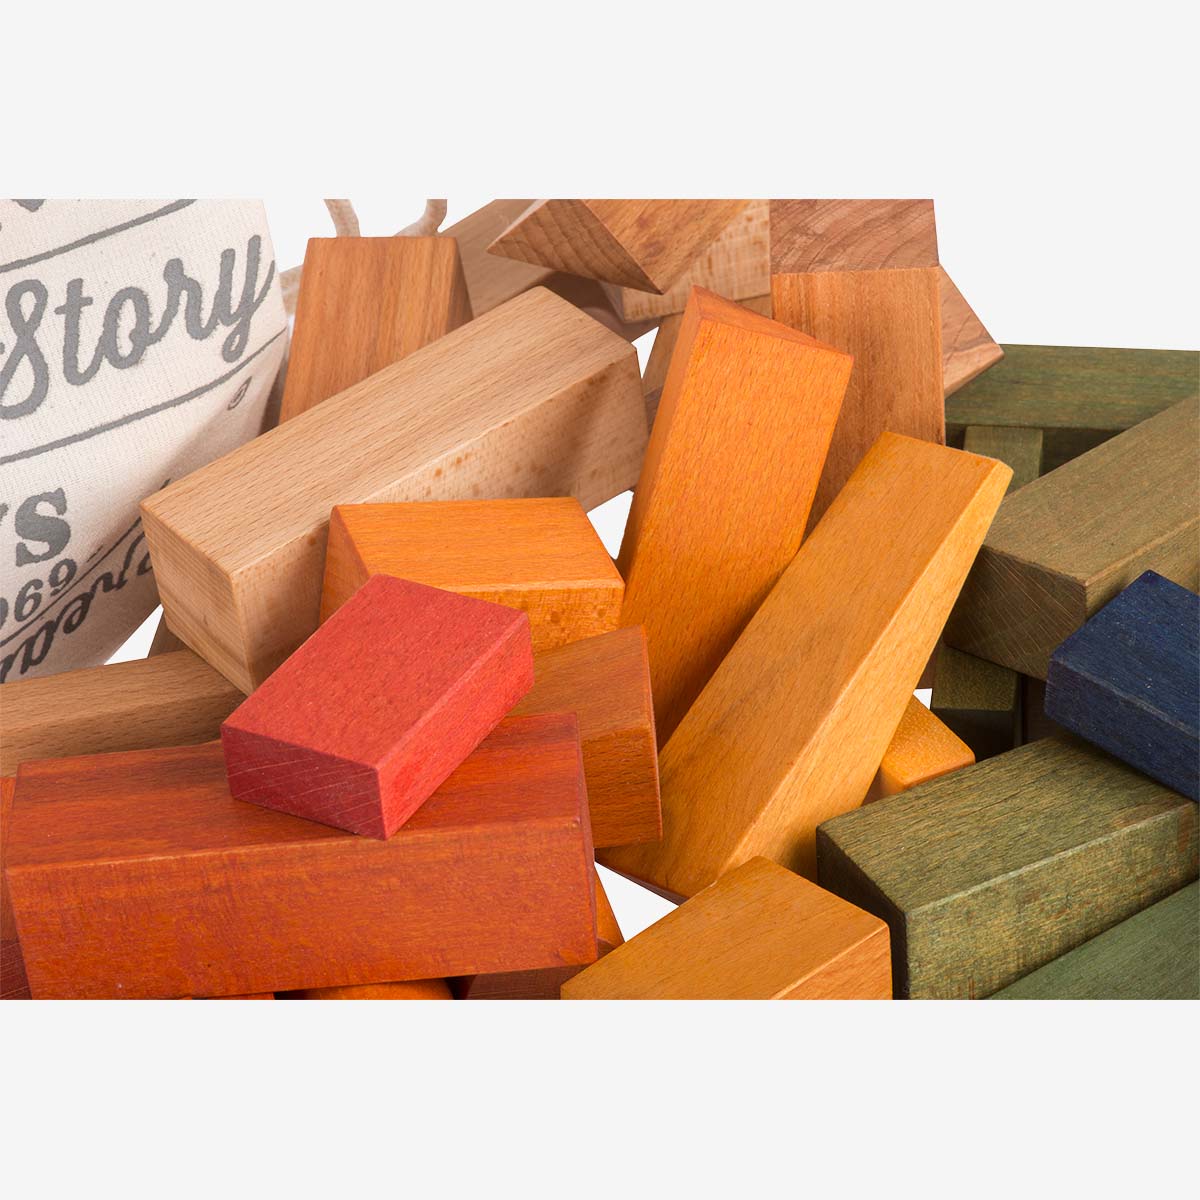 Wooden Story Rainbow XL Blocks in Sack - 50 pcs